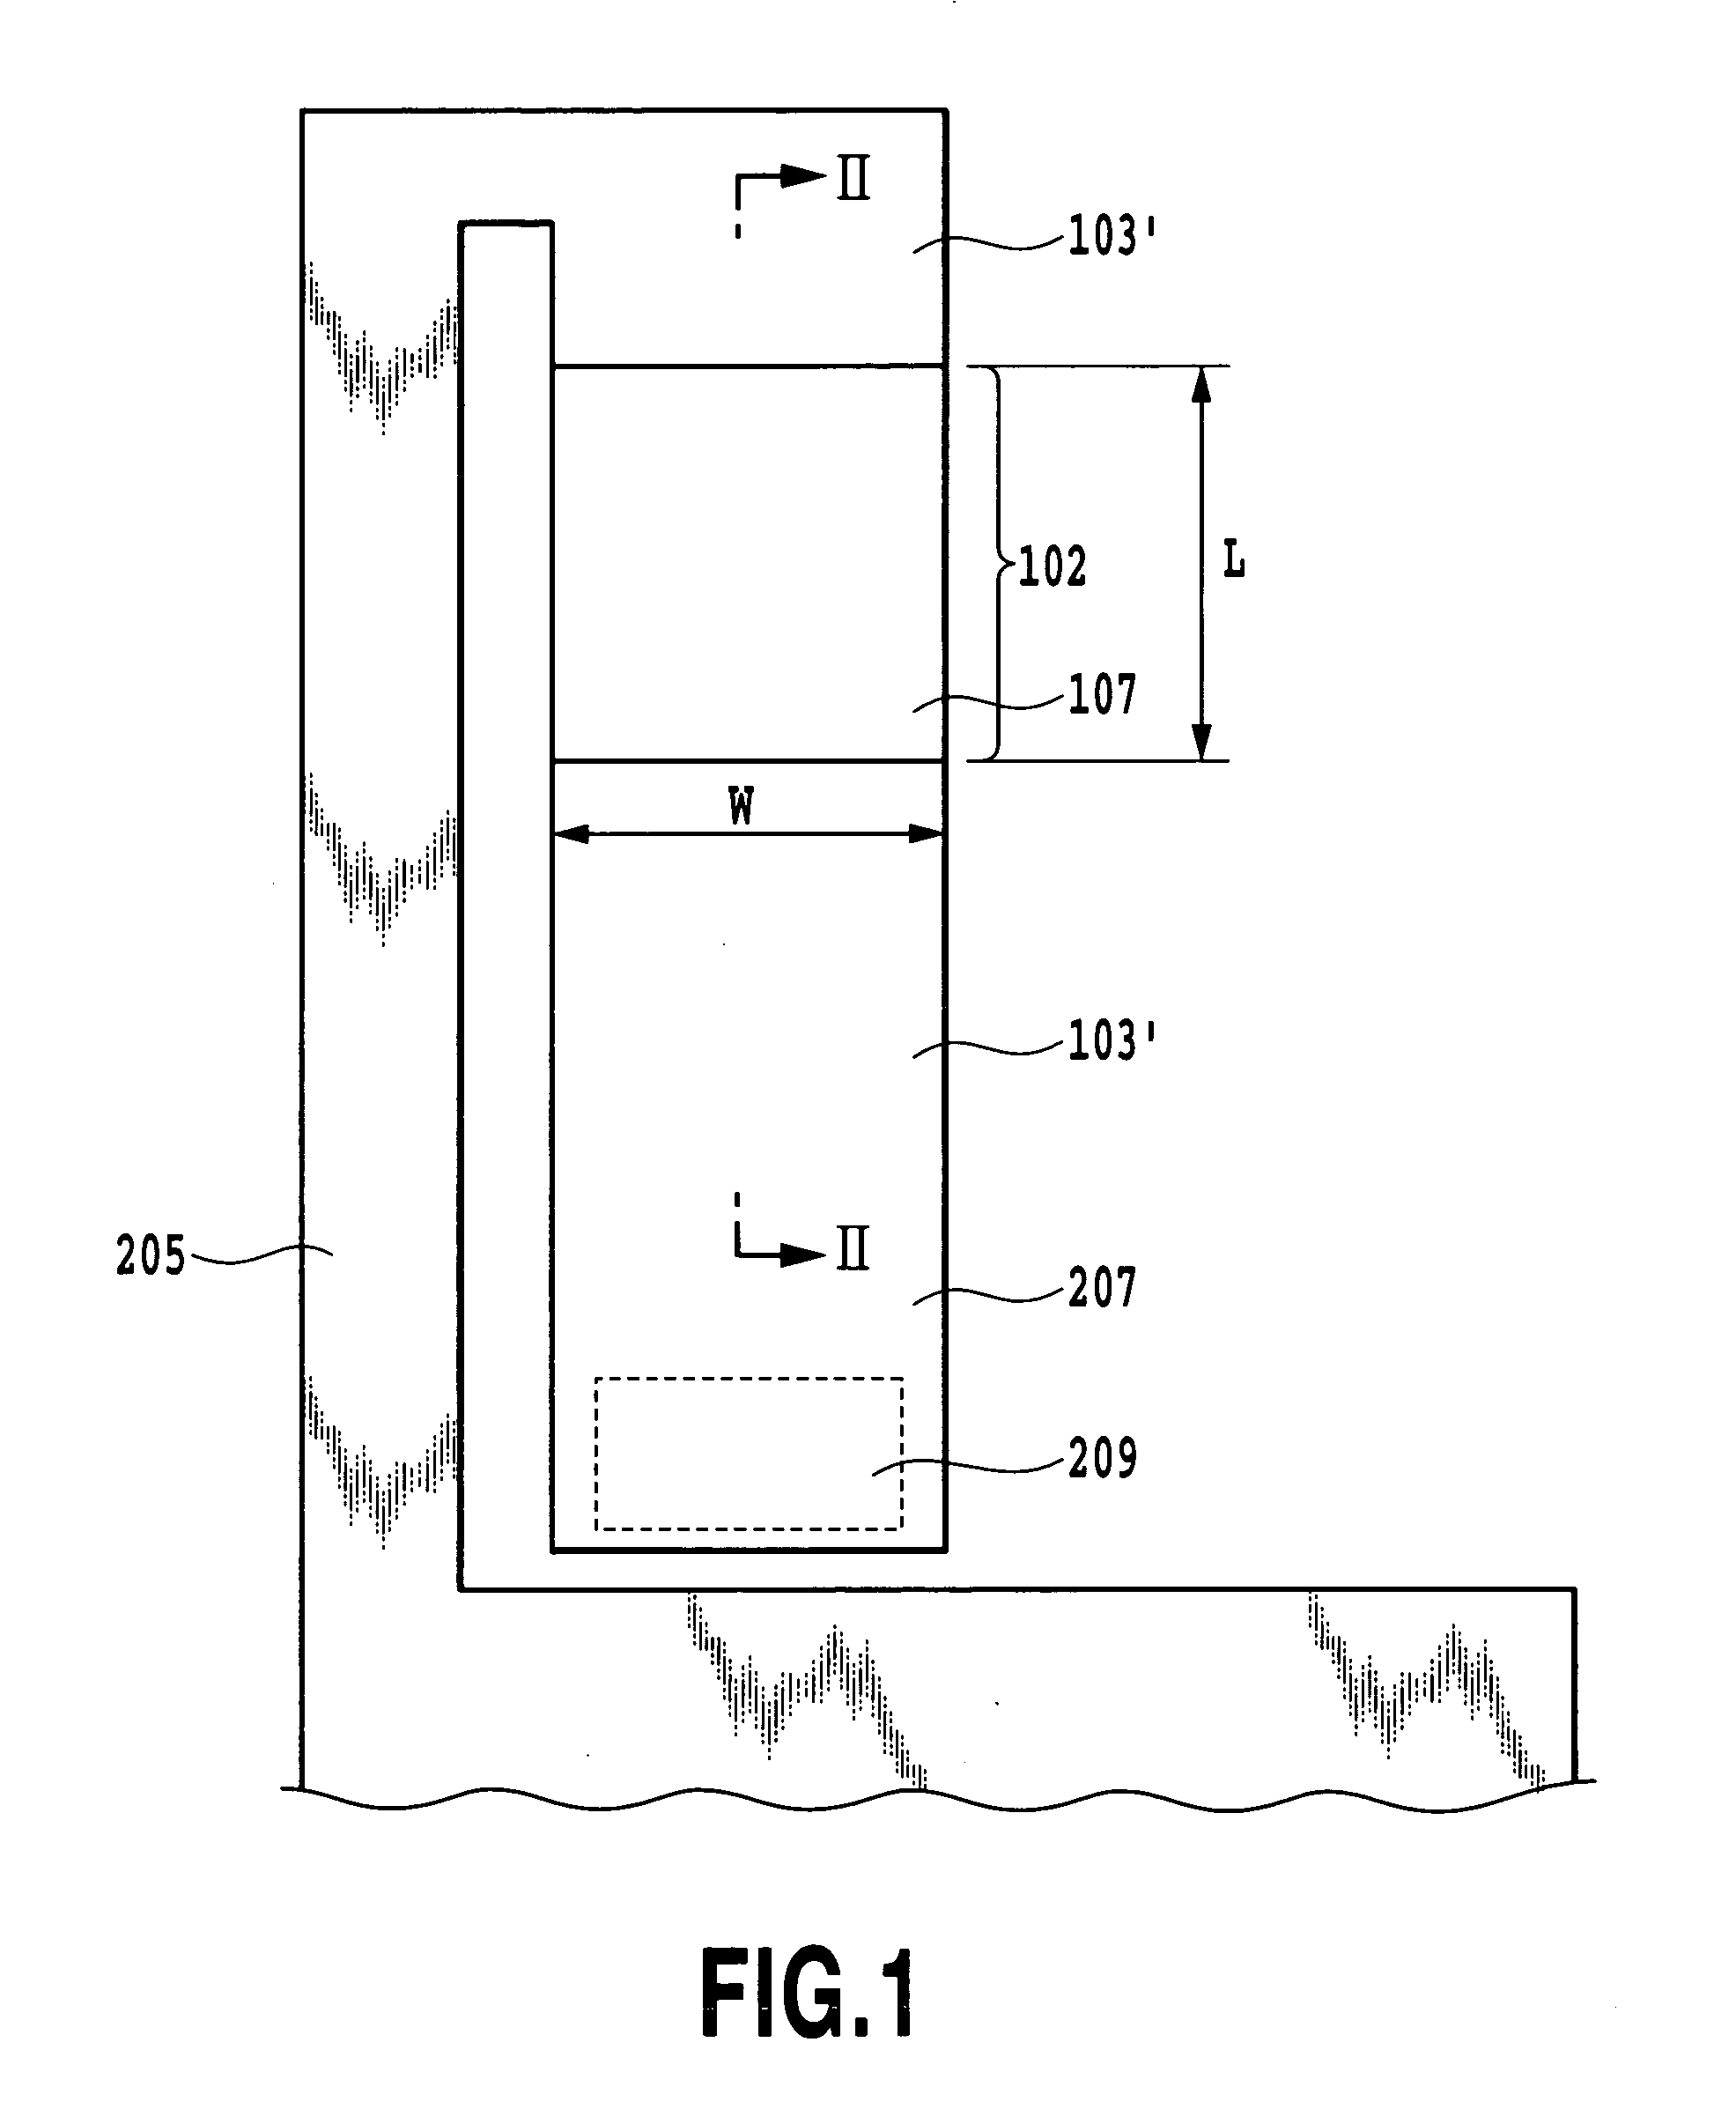 Ink jet head circuit board, method of manufacturing the same and ink jet head using the same